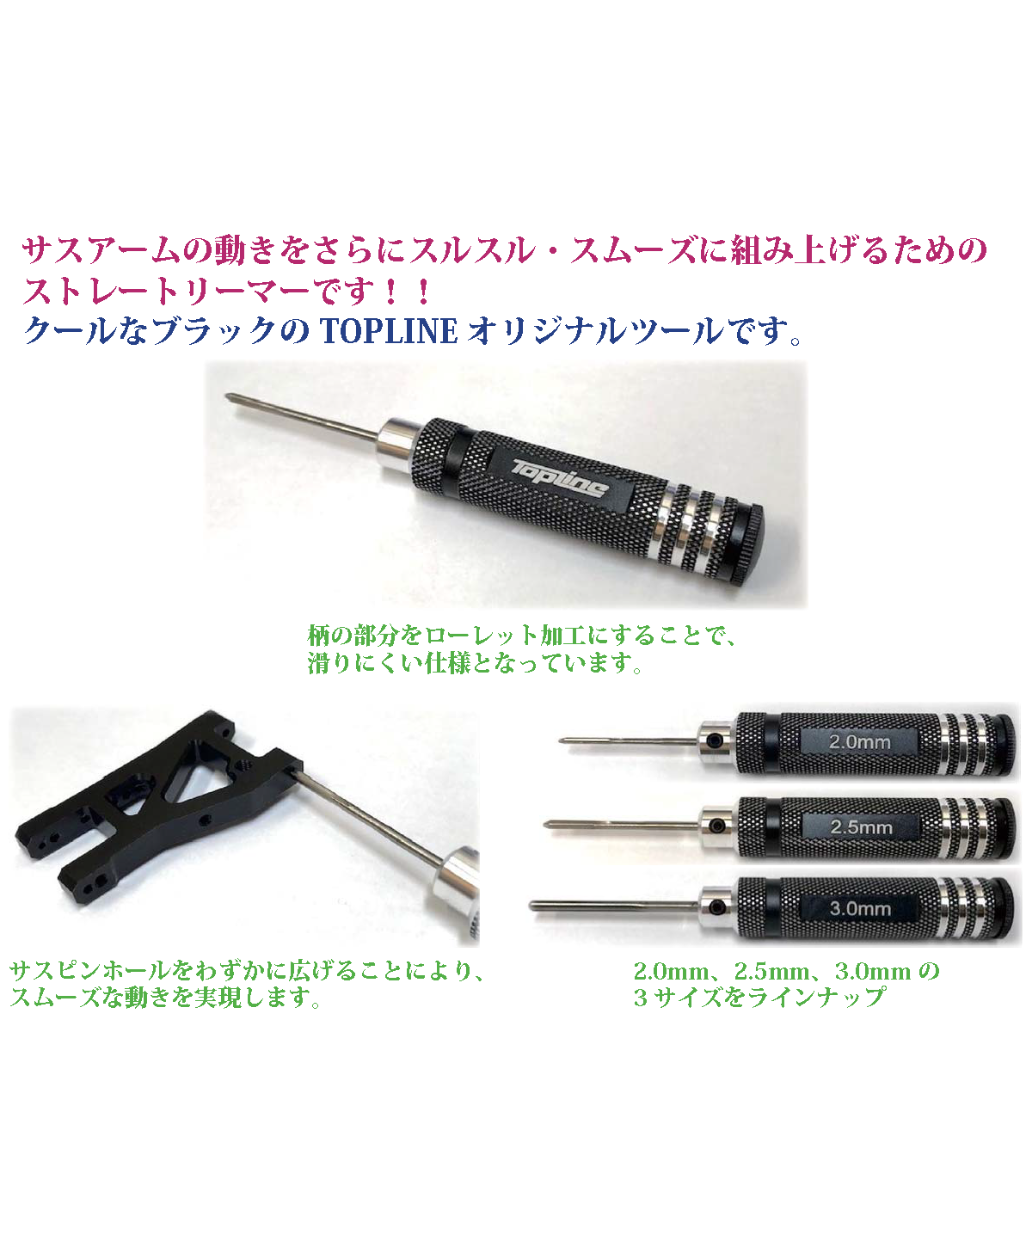 【TK-SR230】MRT ストレートリーマー ブラック 3.0mm